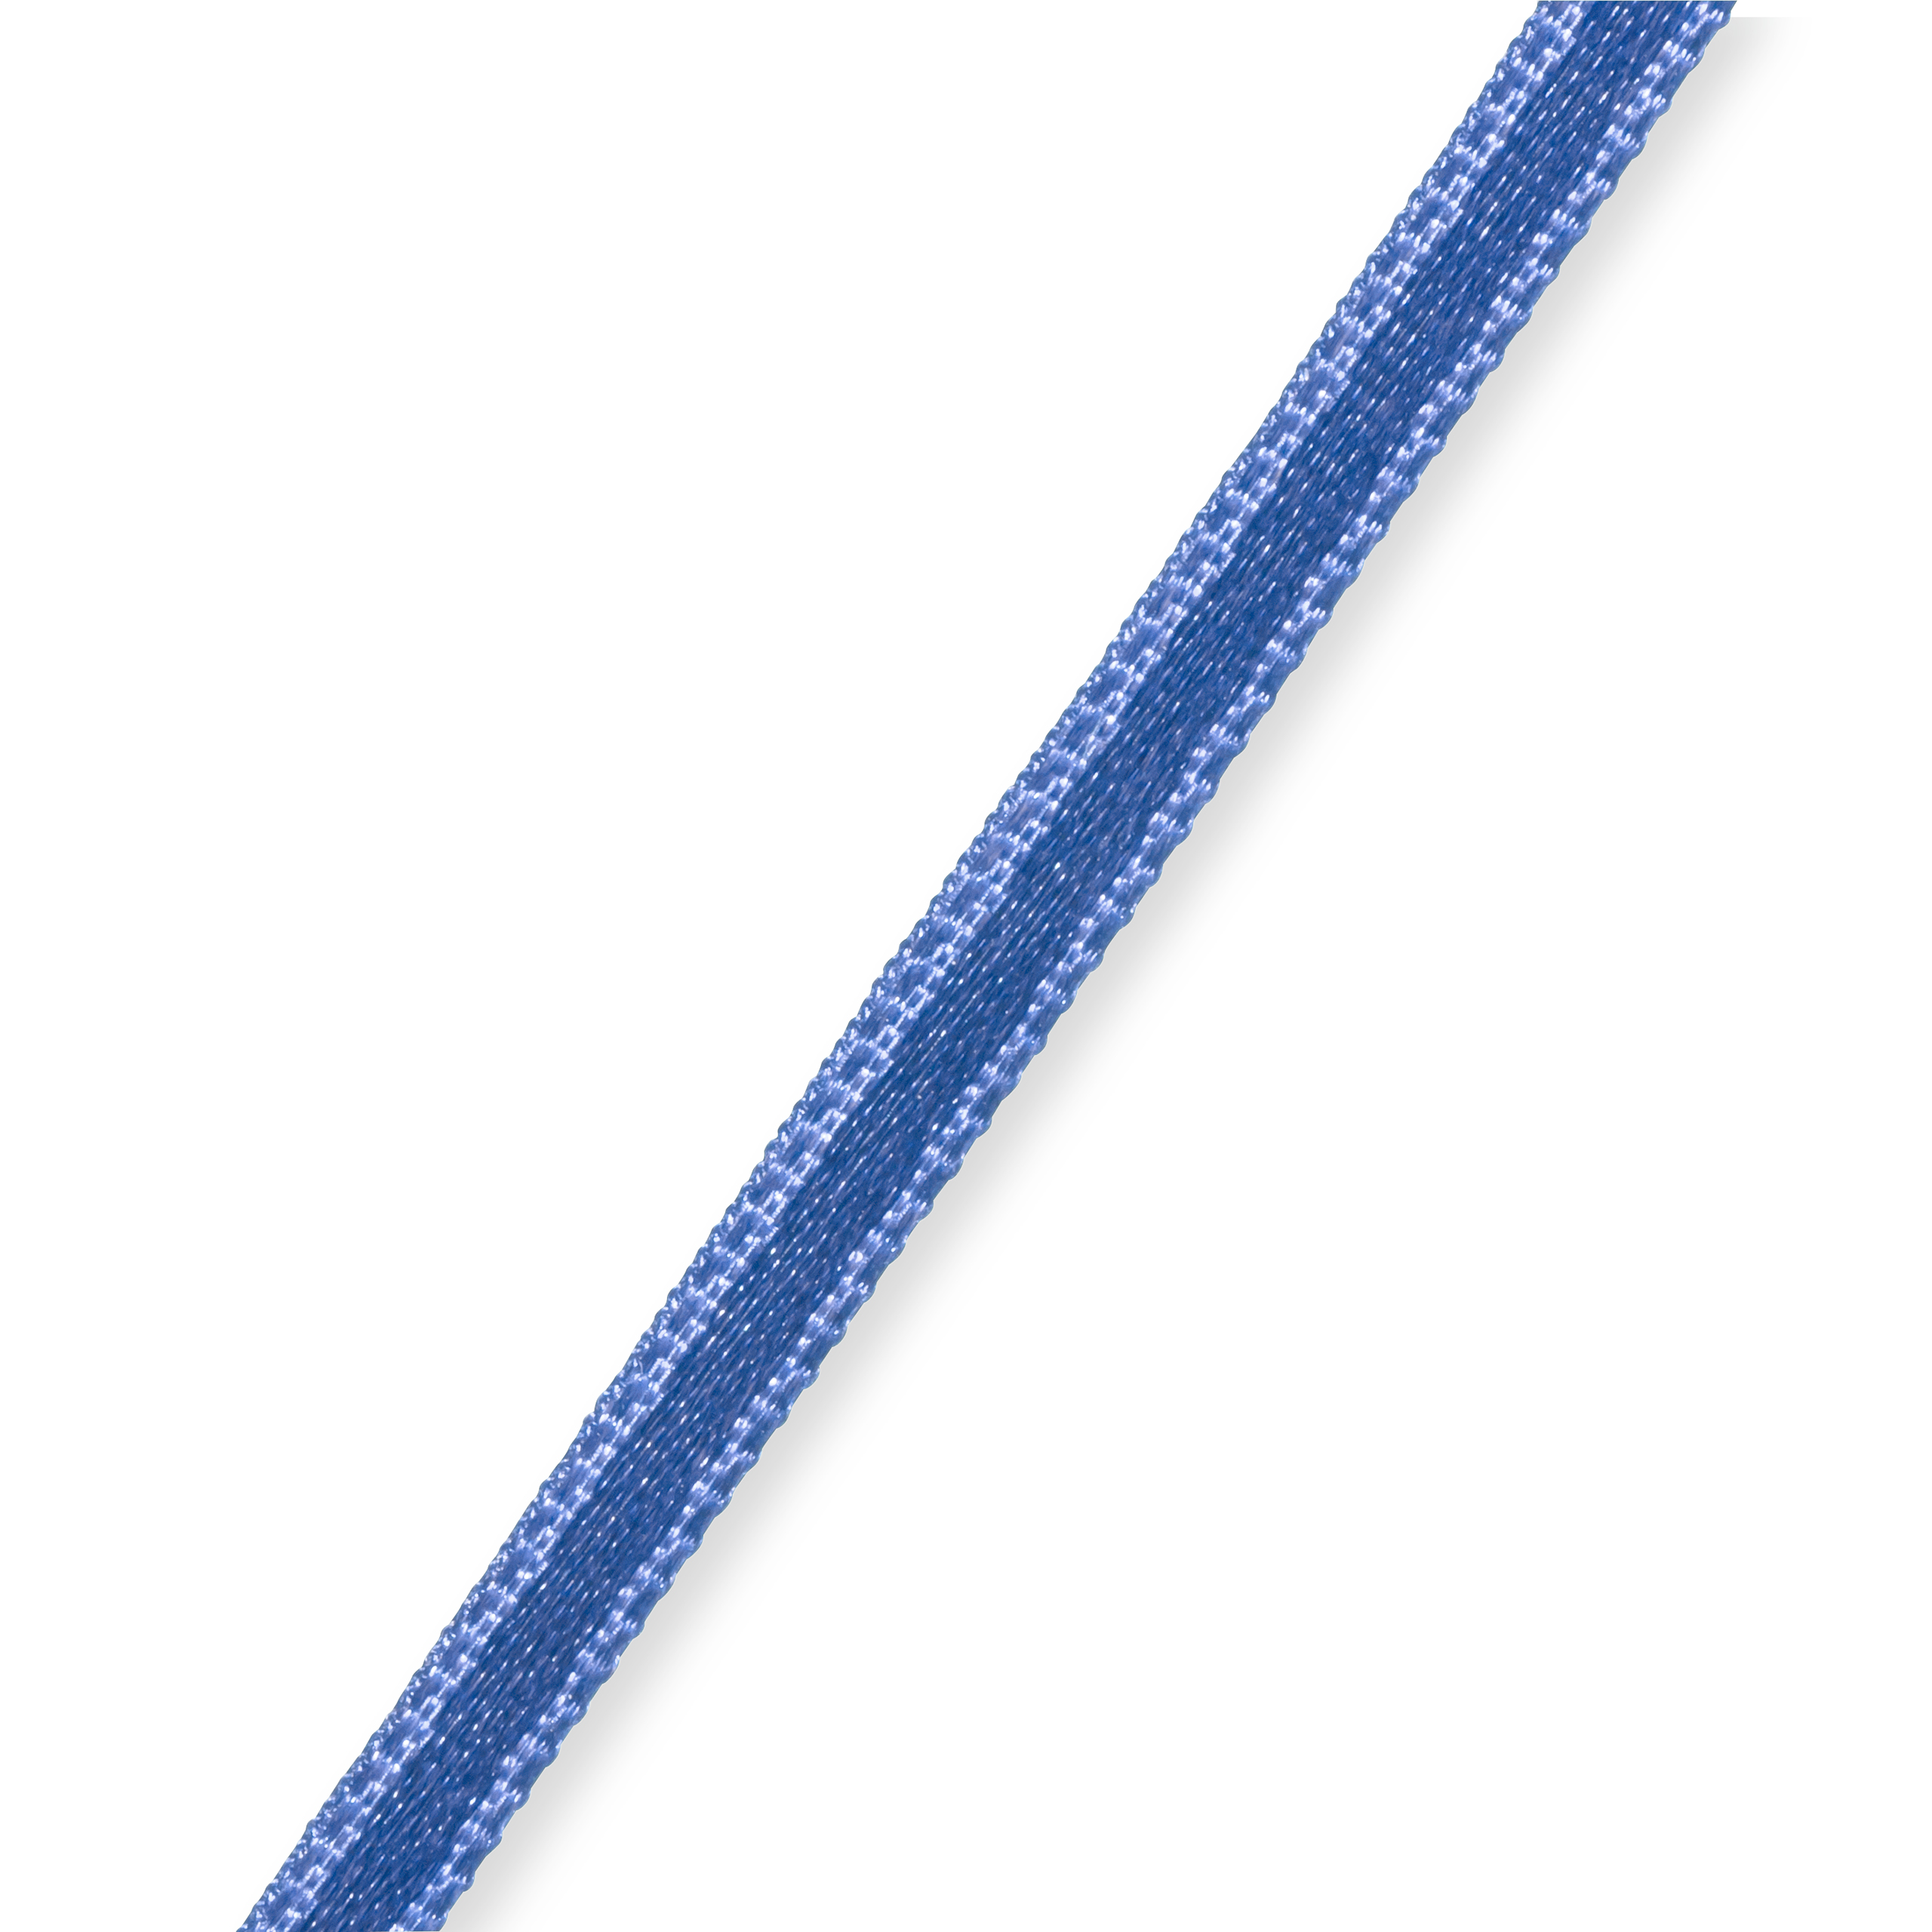 Satin ribbon 3 mm blue, 50 m